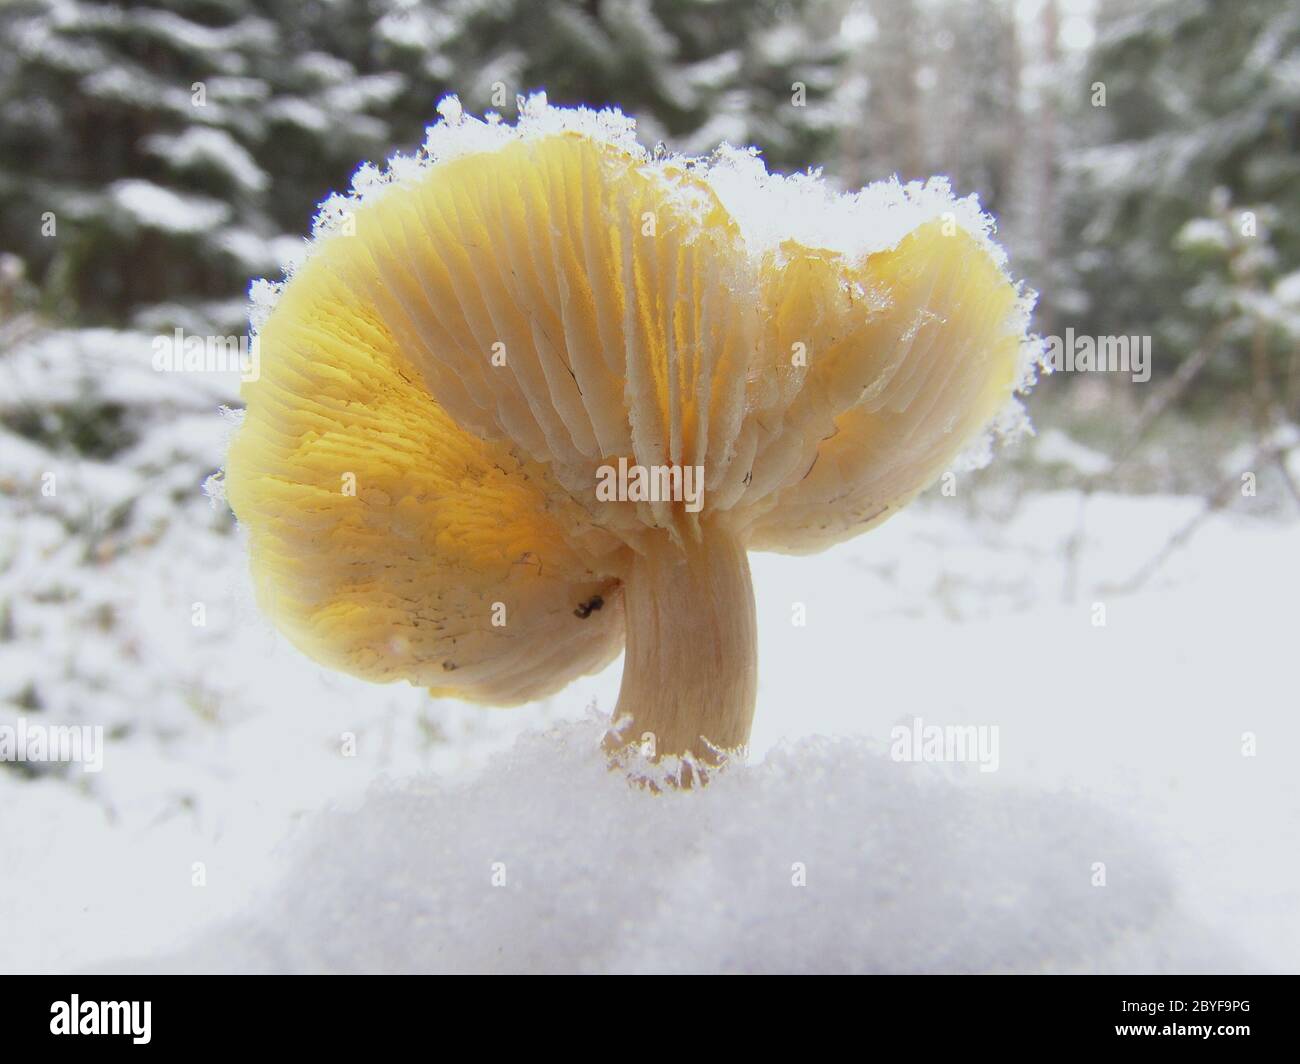 Mushroom in snow Stock Photo